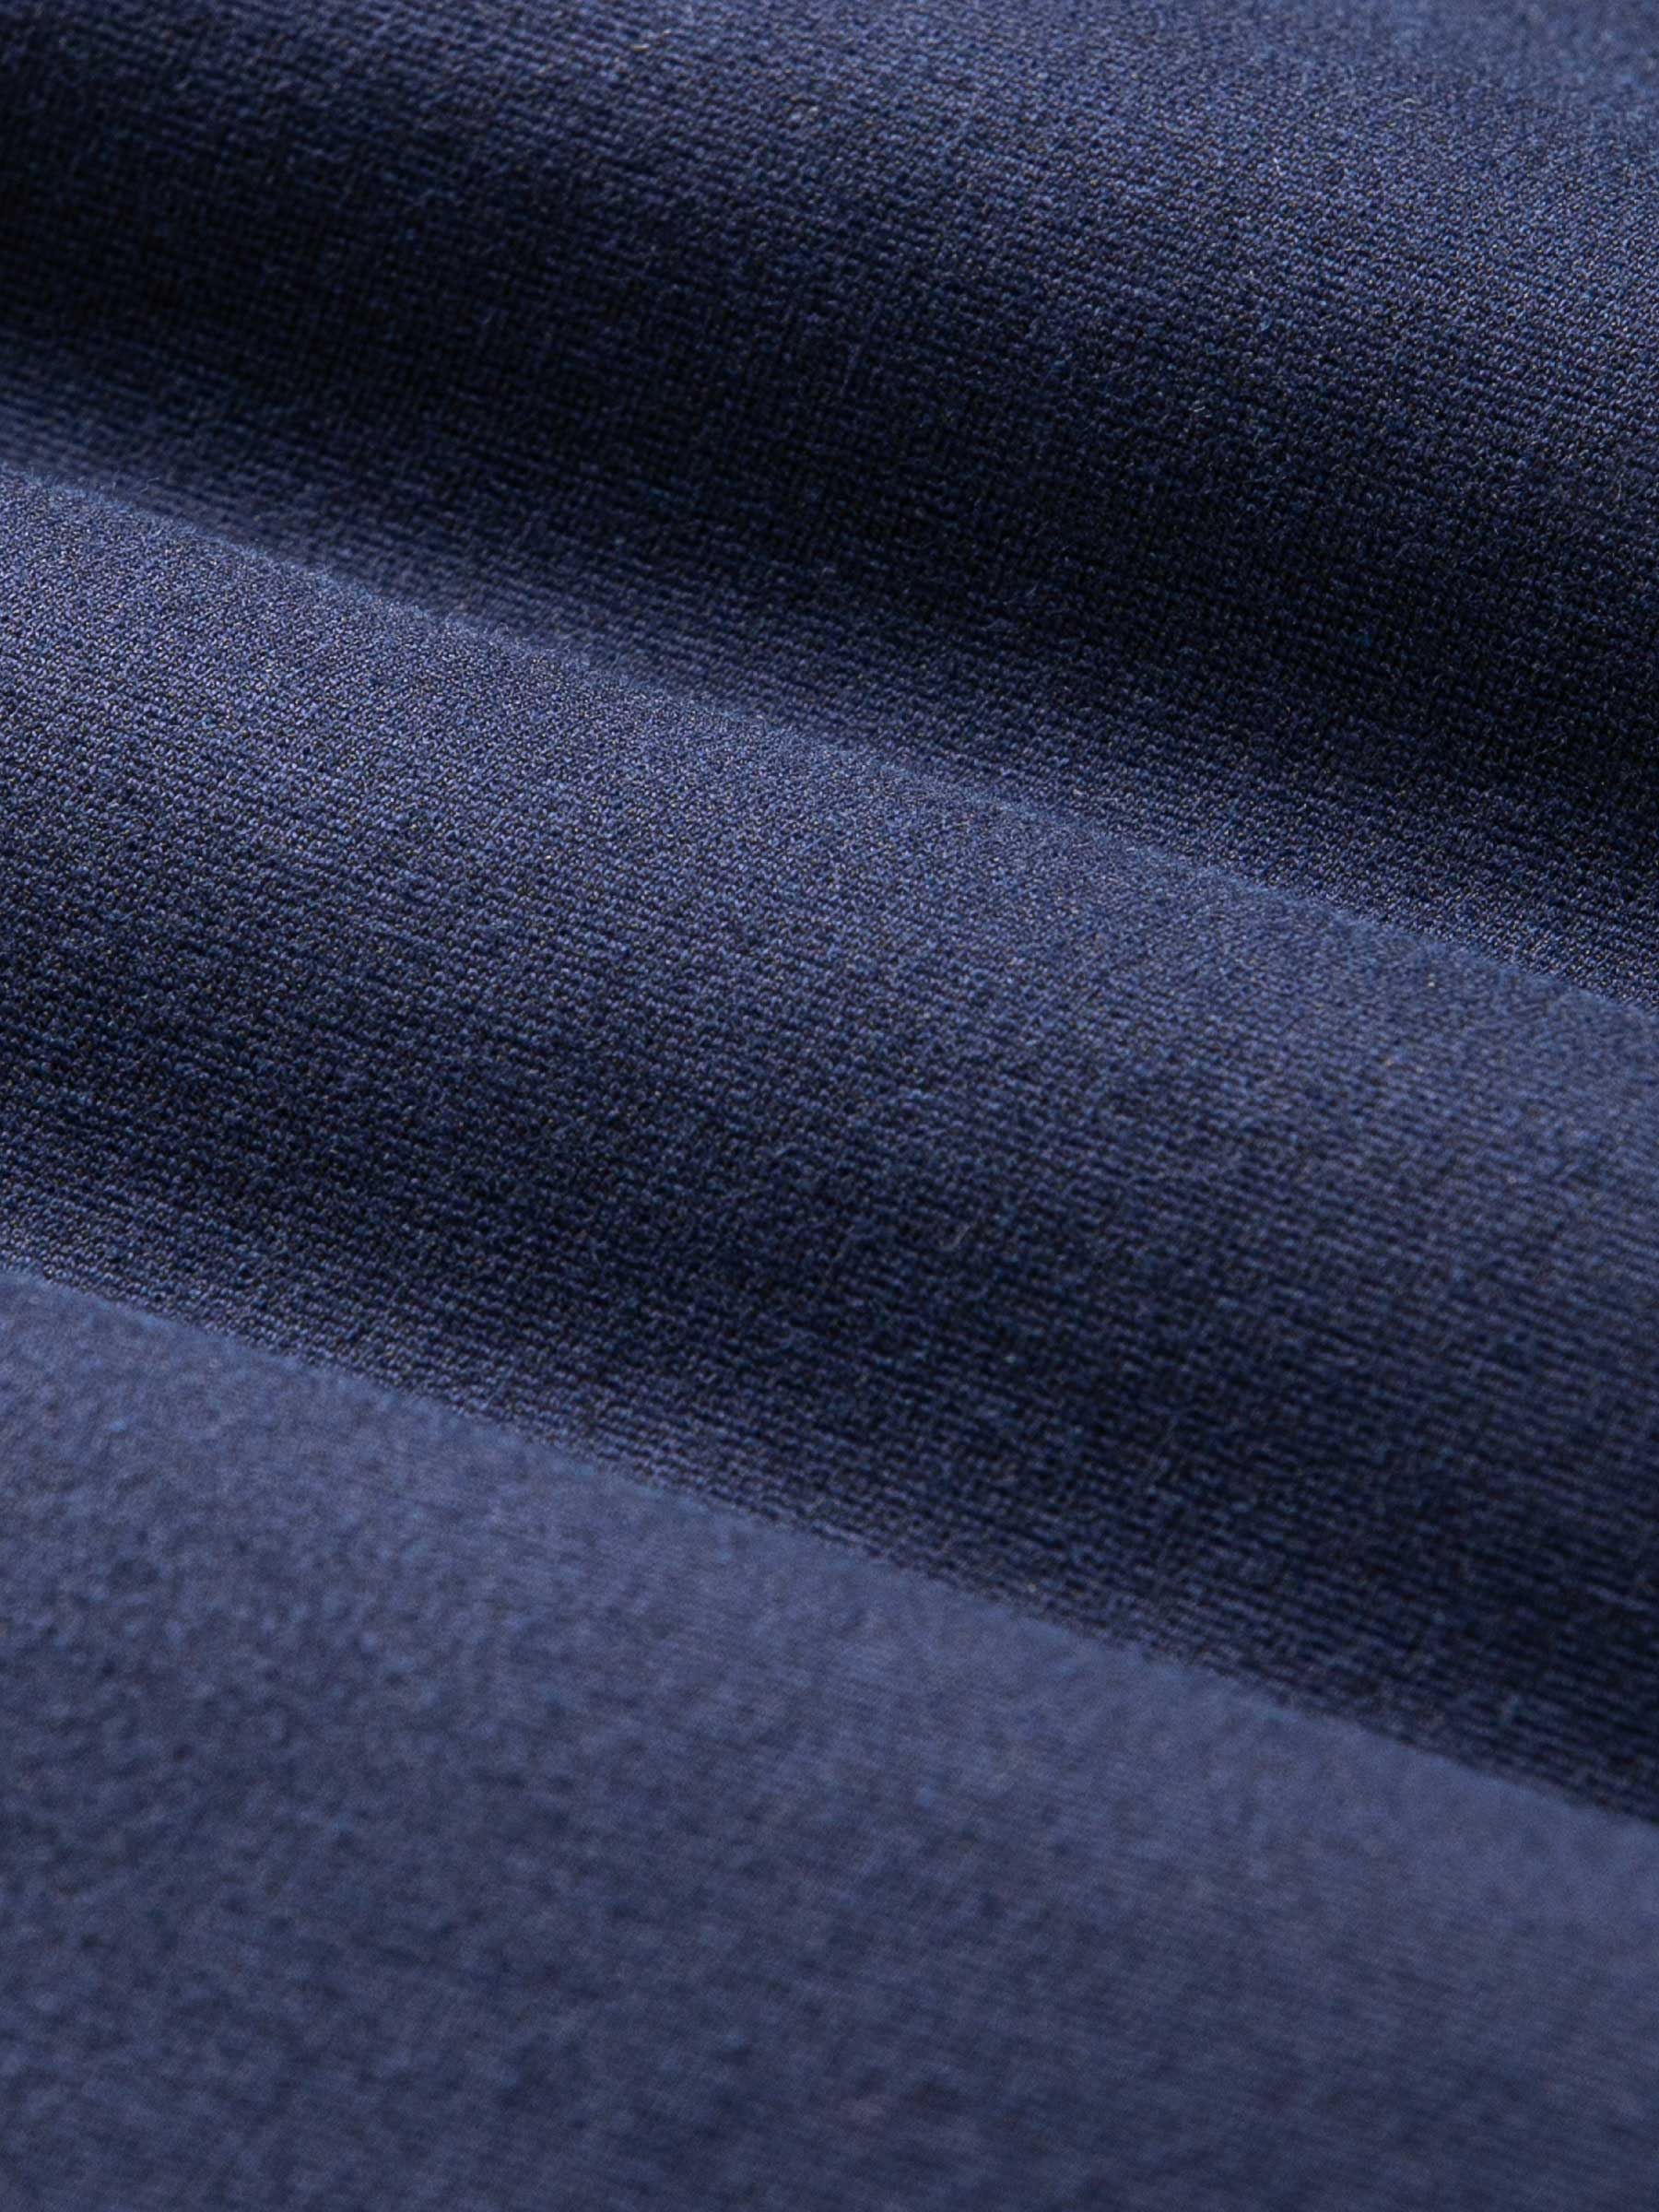 Horizon Turtleneck Navy Sweater -3XL